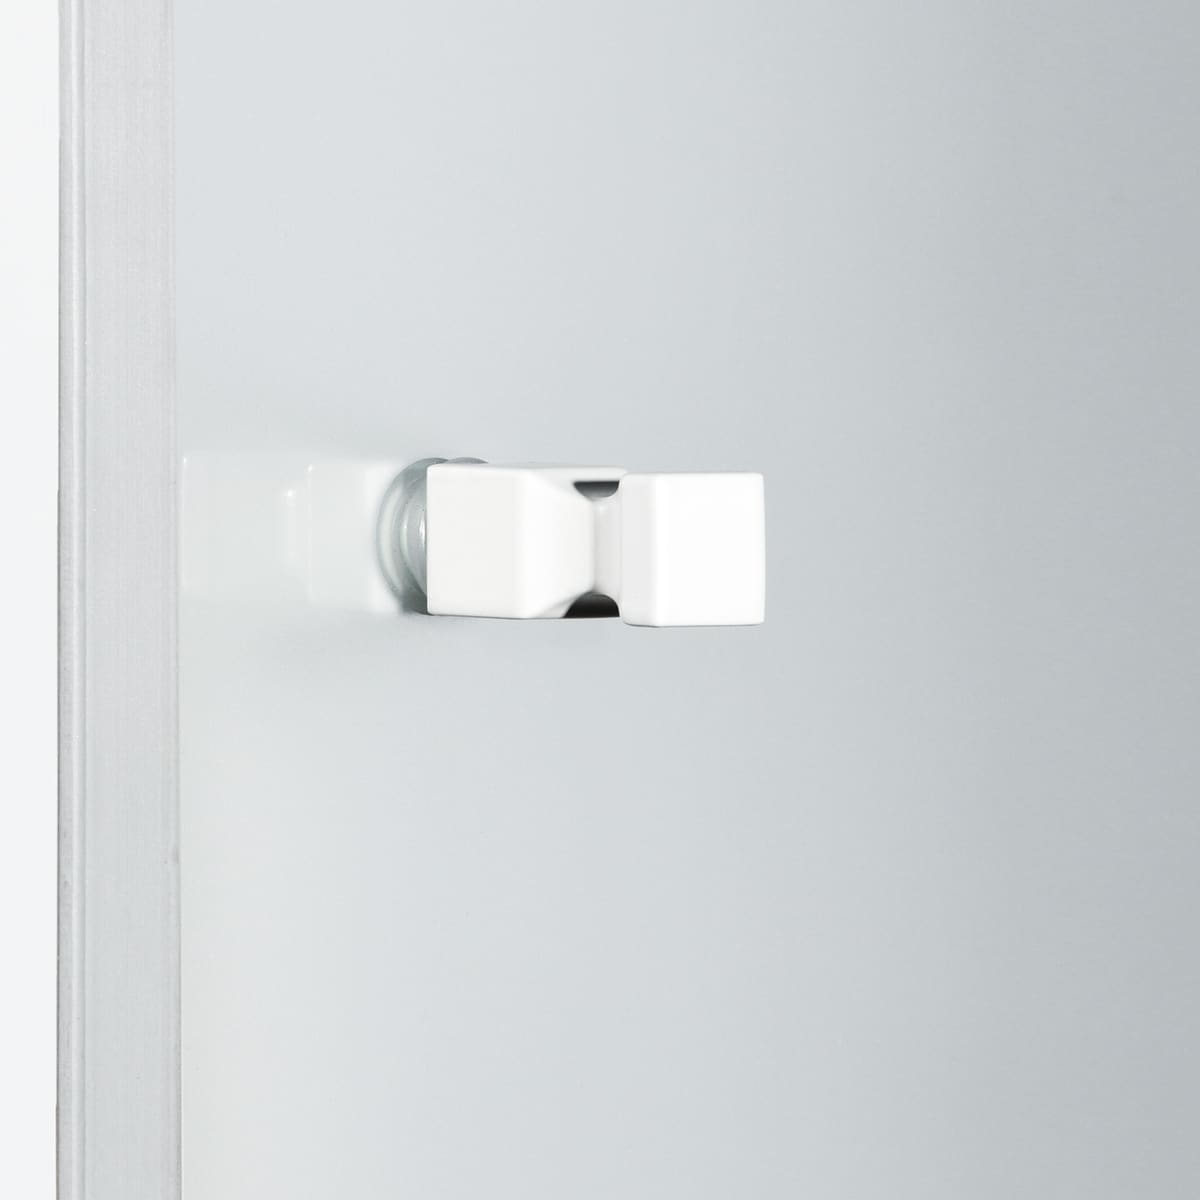 RECORD 4-DOOR SLIDING DOOR L 157-161 H 195 CM CLEAR GLASS 6 MM WHITE